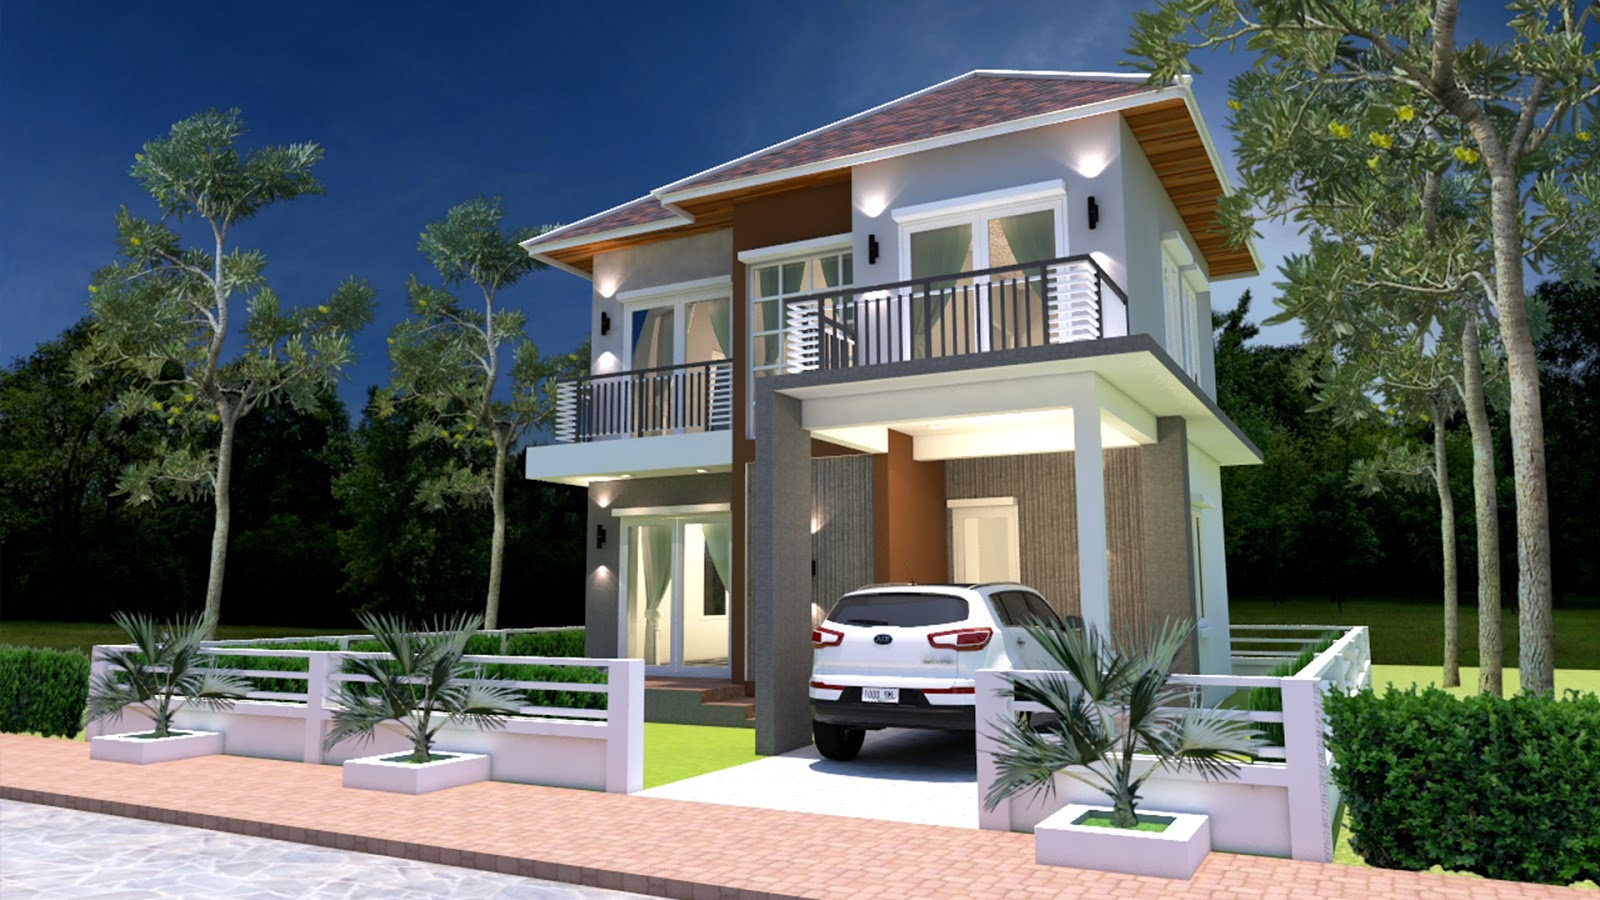 Sketchup Home Plan 8x8m with 3 Bedrooms Samphoas House Plan